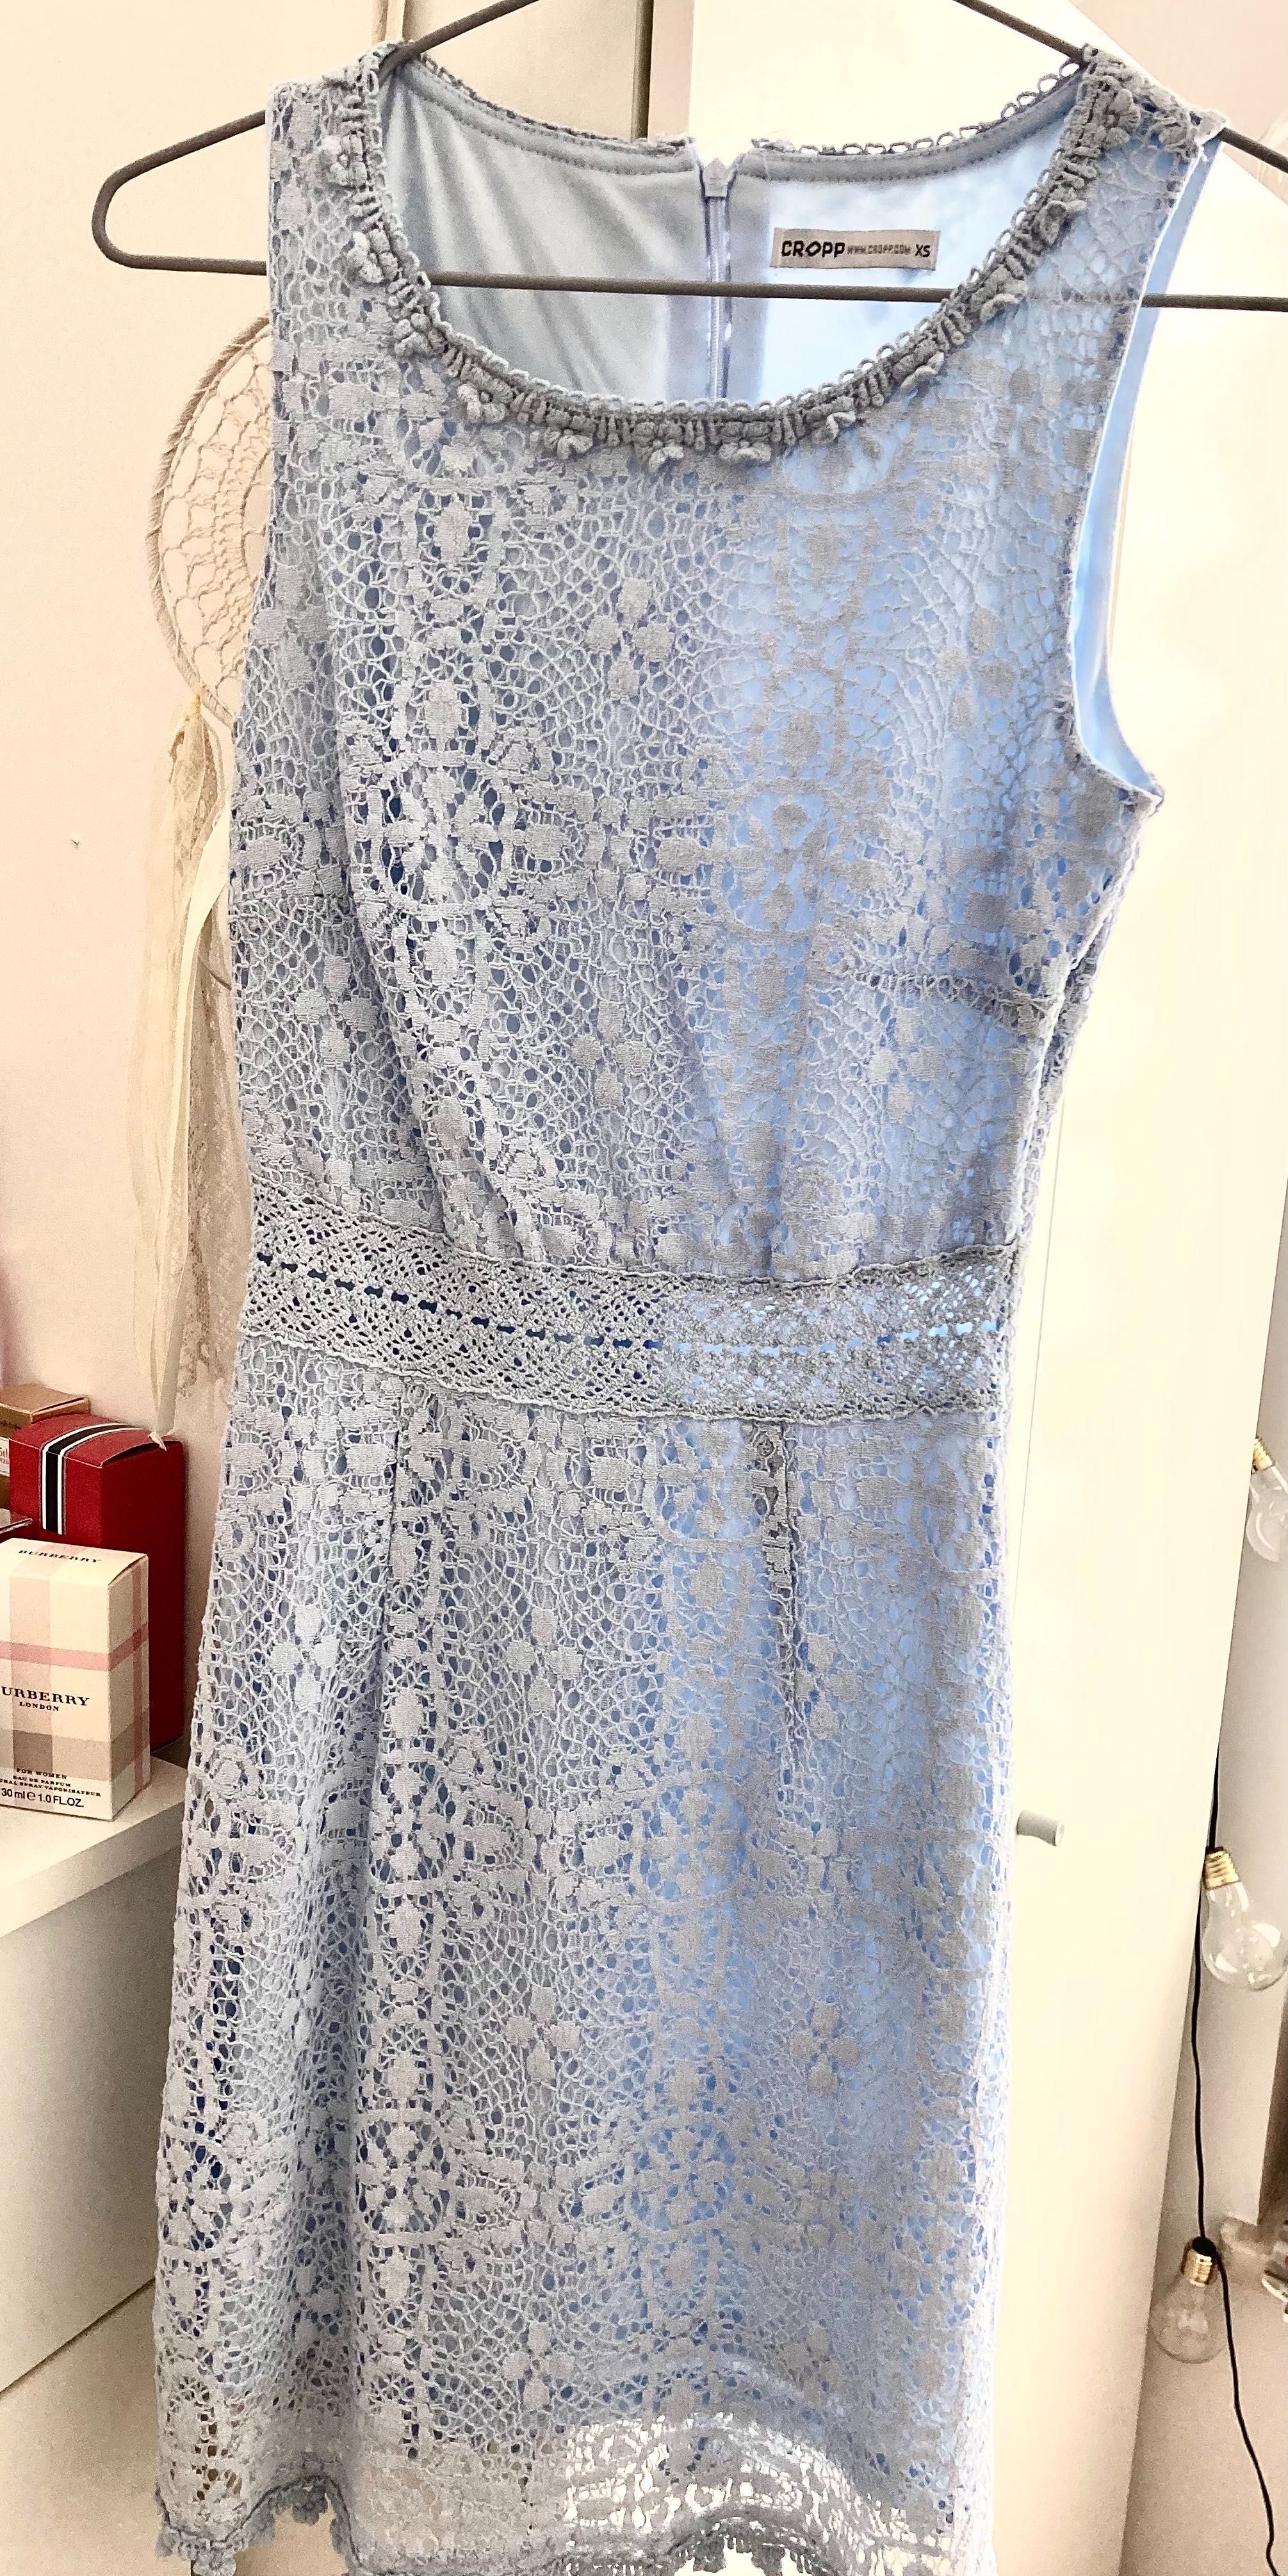 Błękitna sukienka marki Cropp